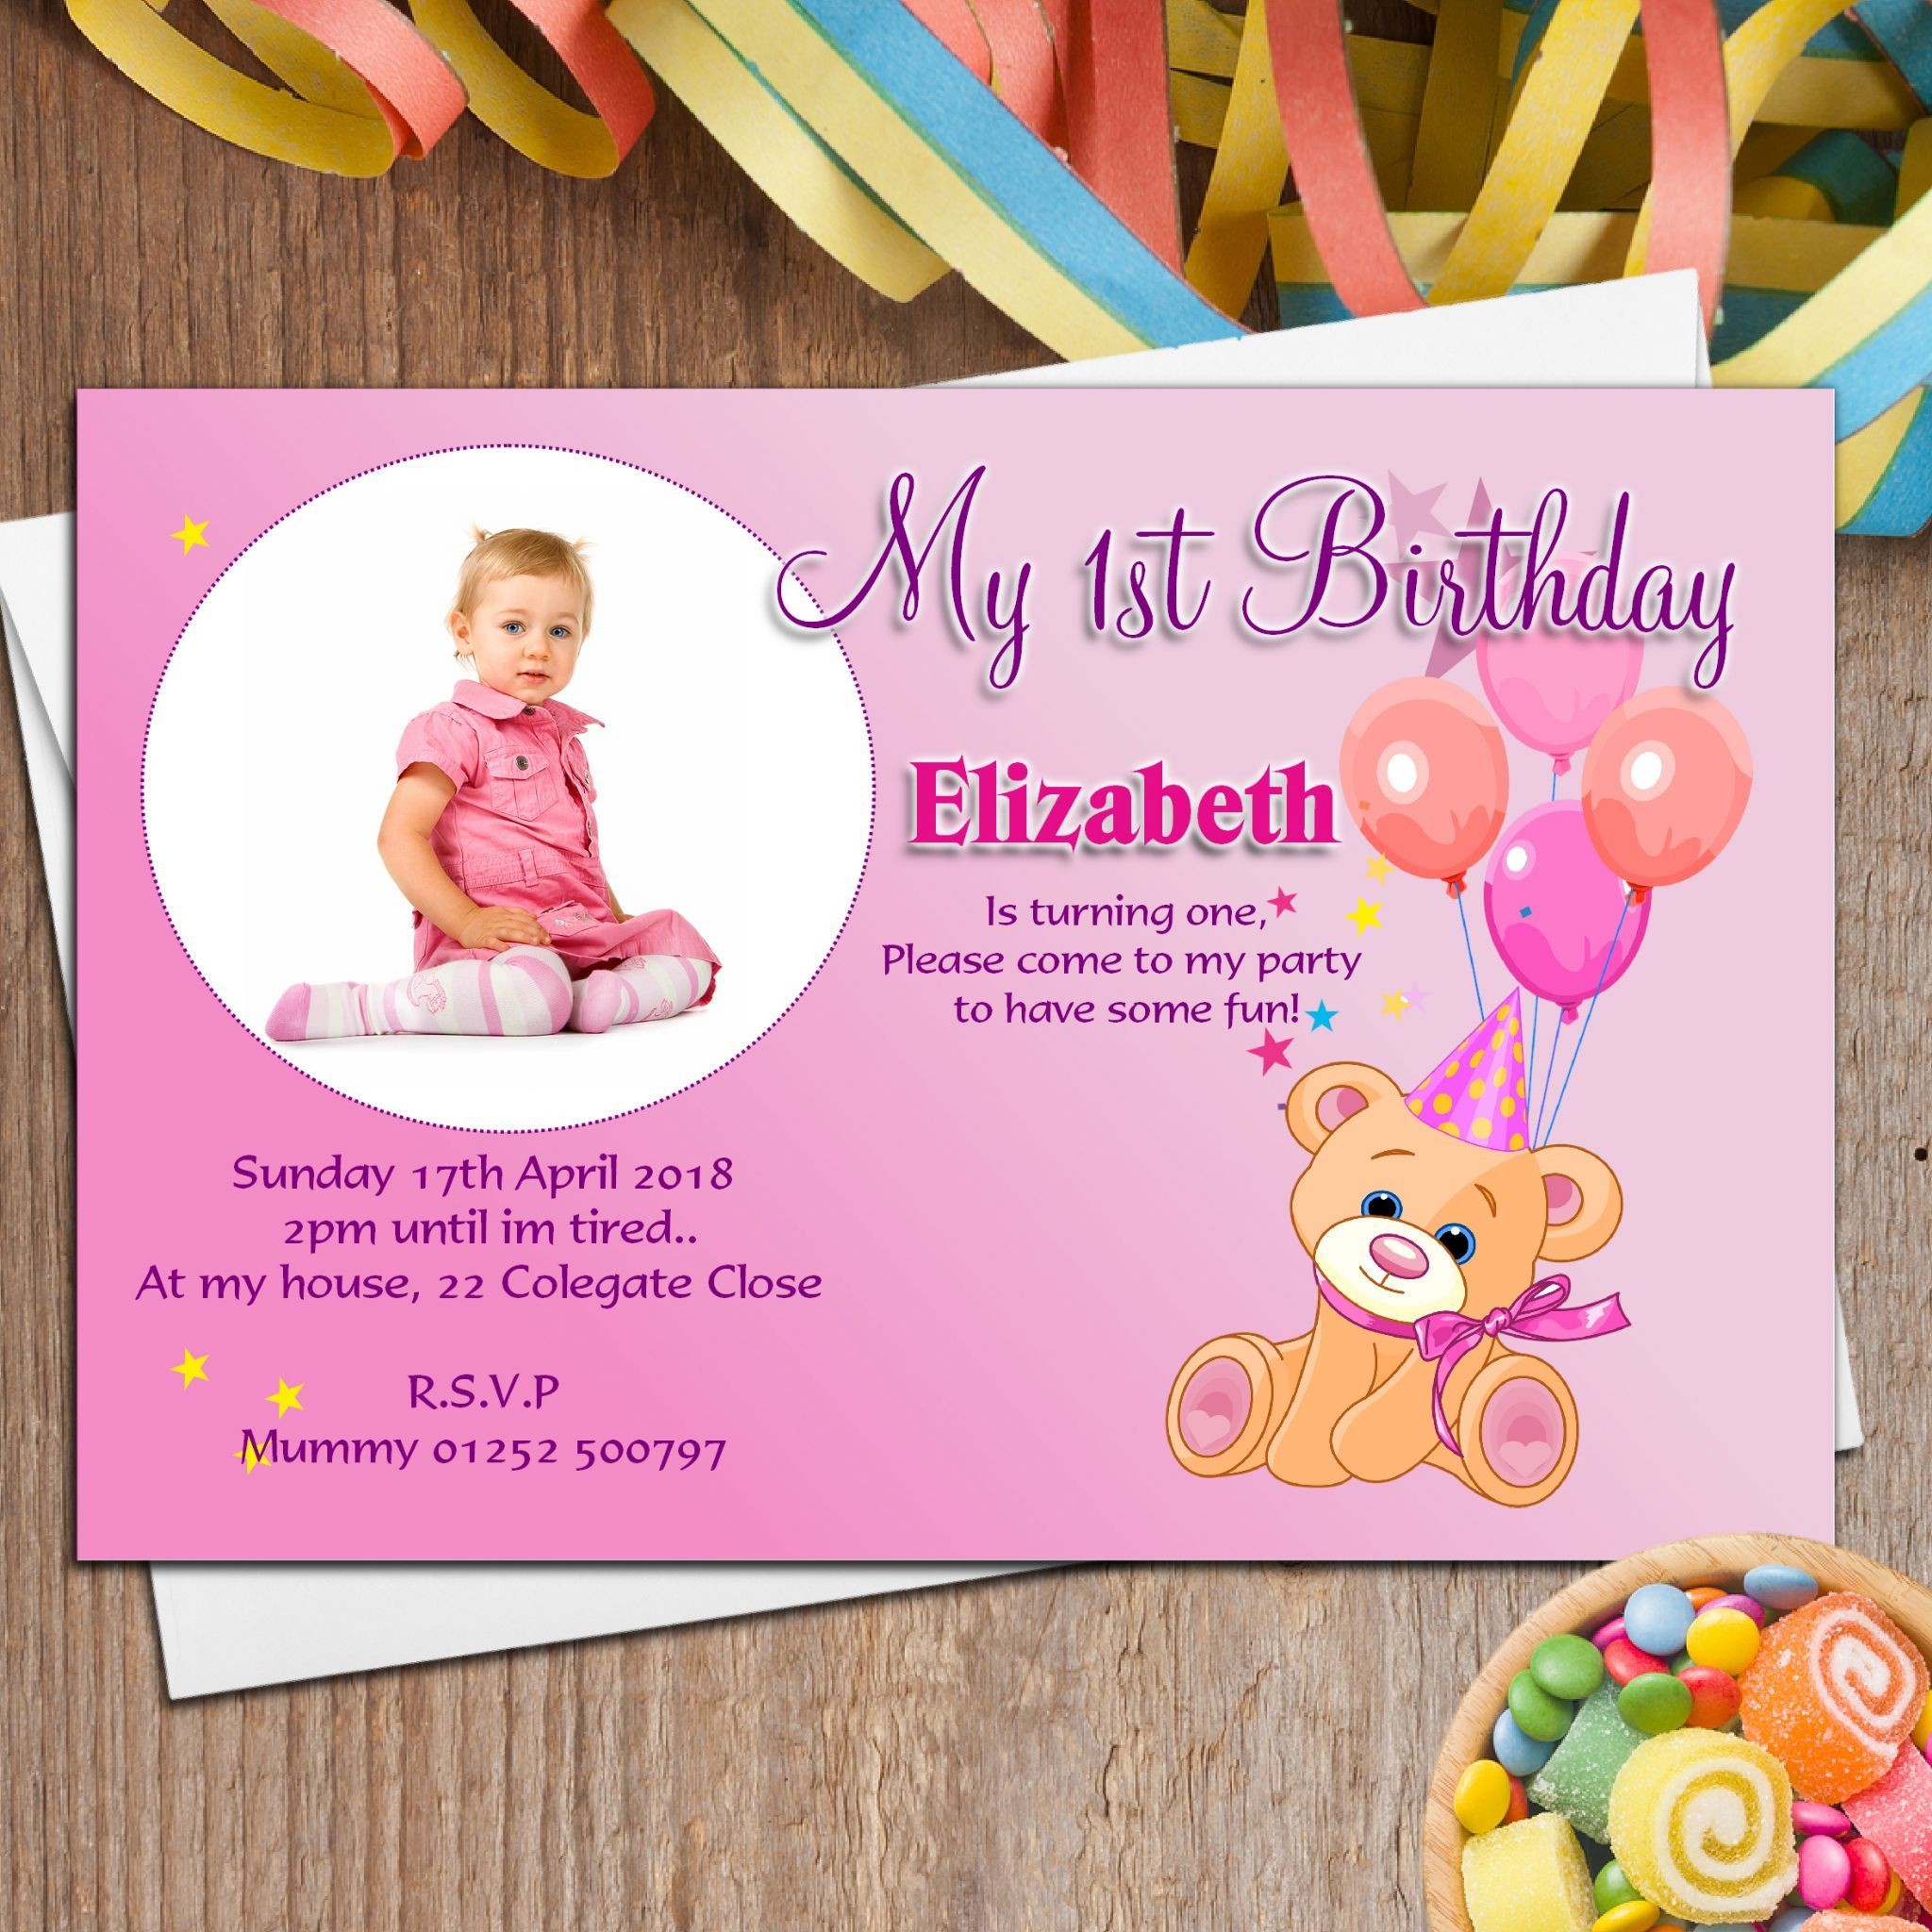 1st Birthday Invitation Cards For Baby Boy In India Dnyaneshwar Document Card Online